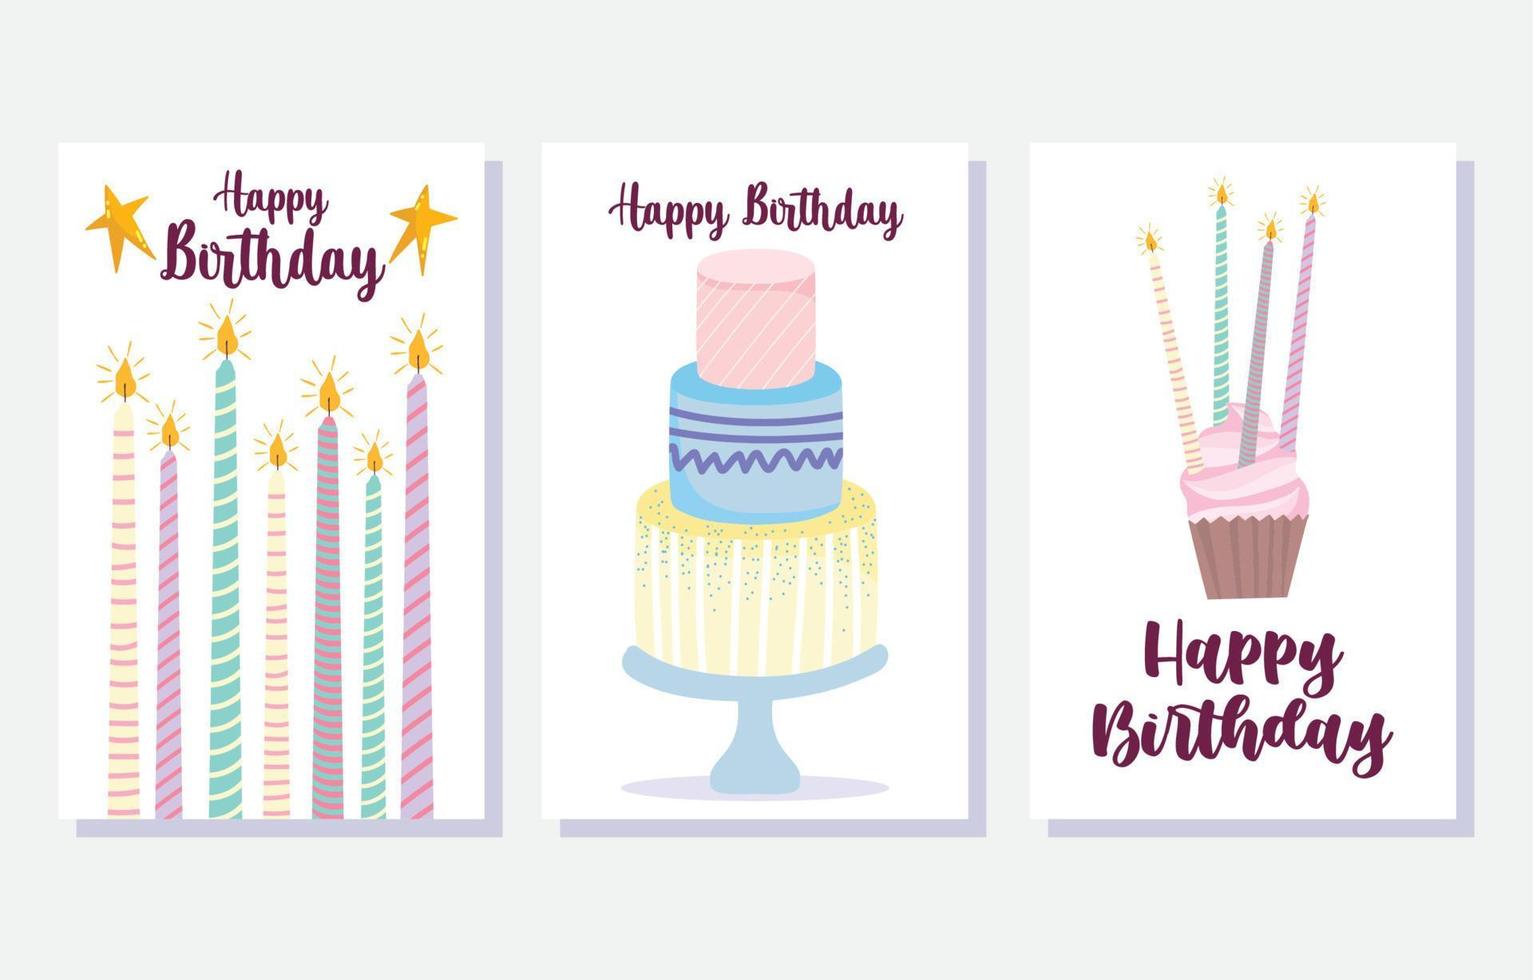 happy birthday, cake burning candles cupcake cartoon celebration decoration card vector